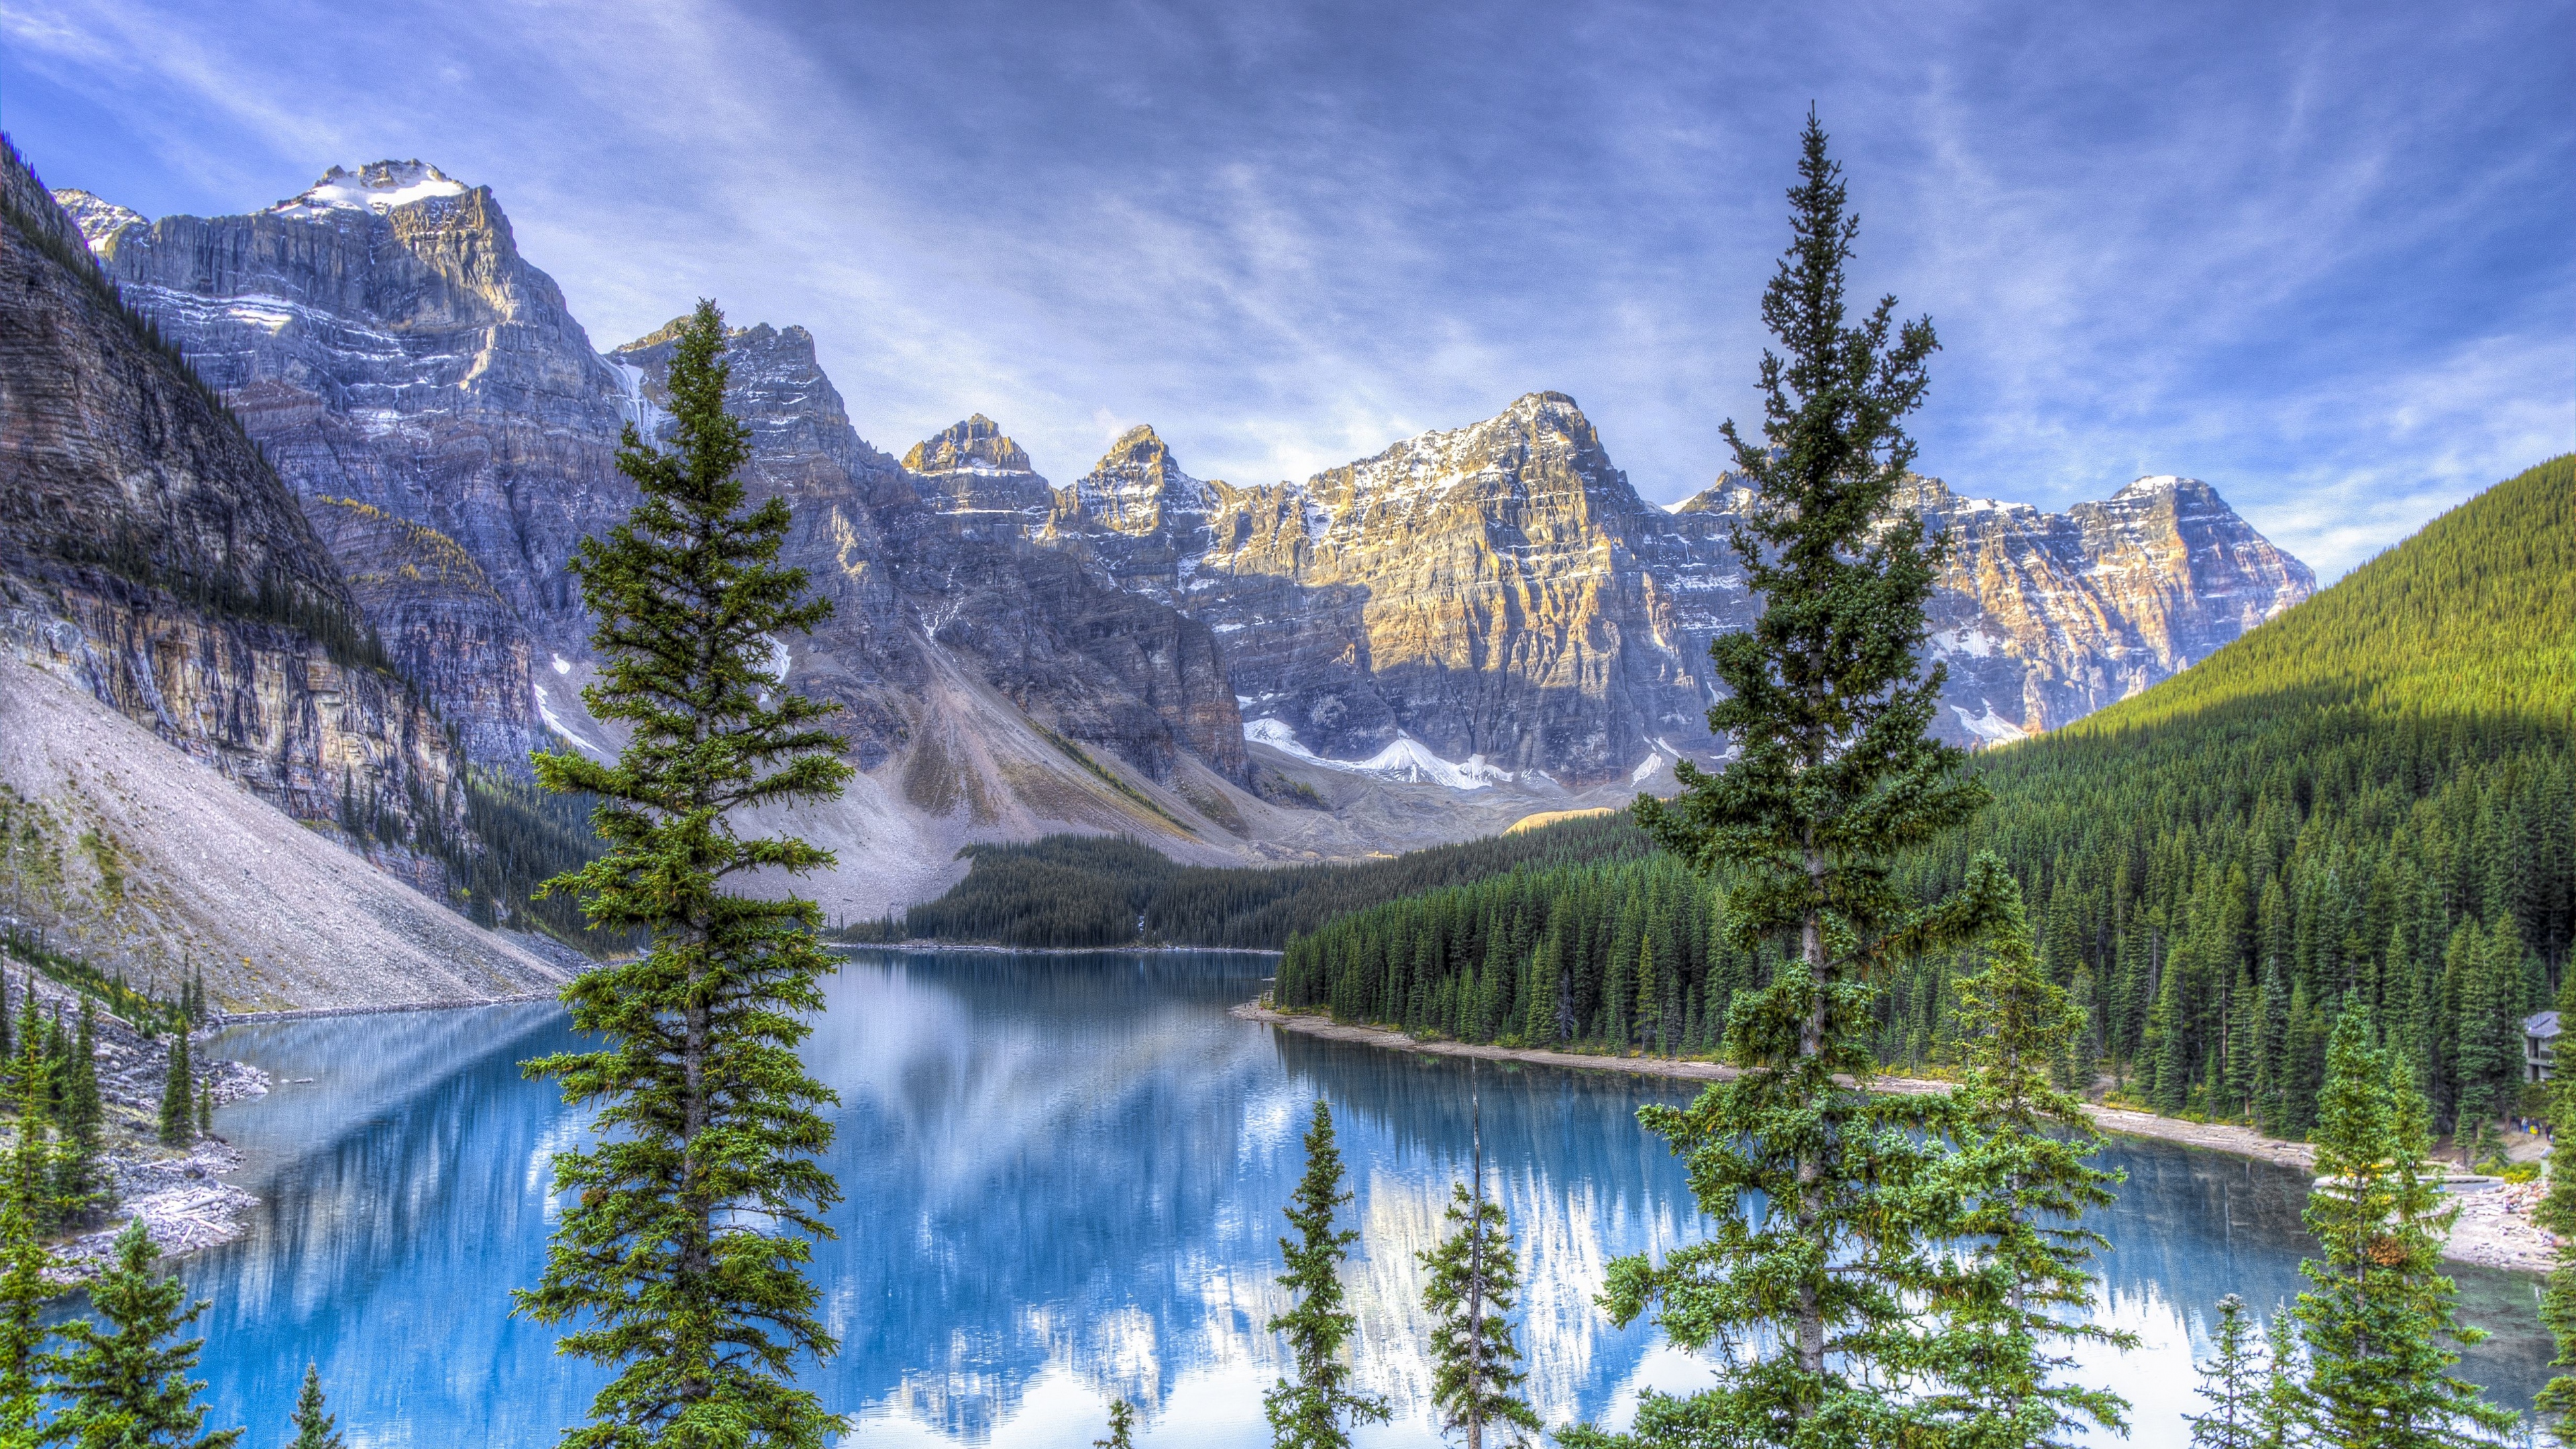  Moraine lake Alberta Canada Hdr Wallpaper Background 4K Ultra HD 3840x2160